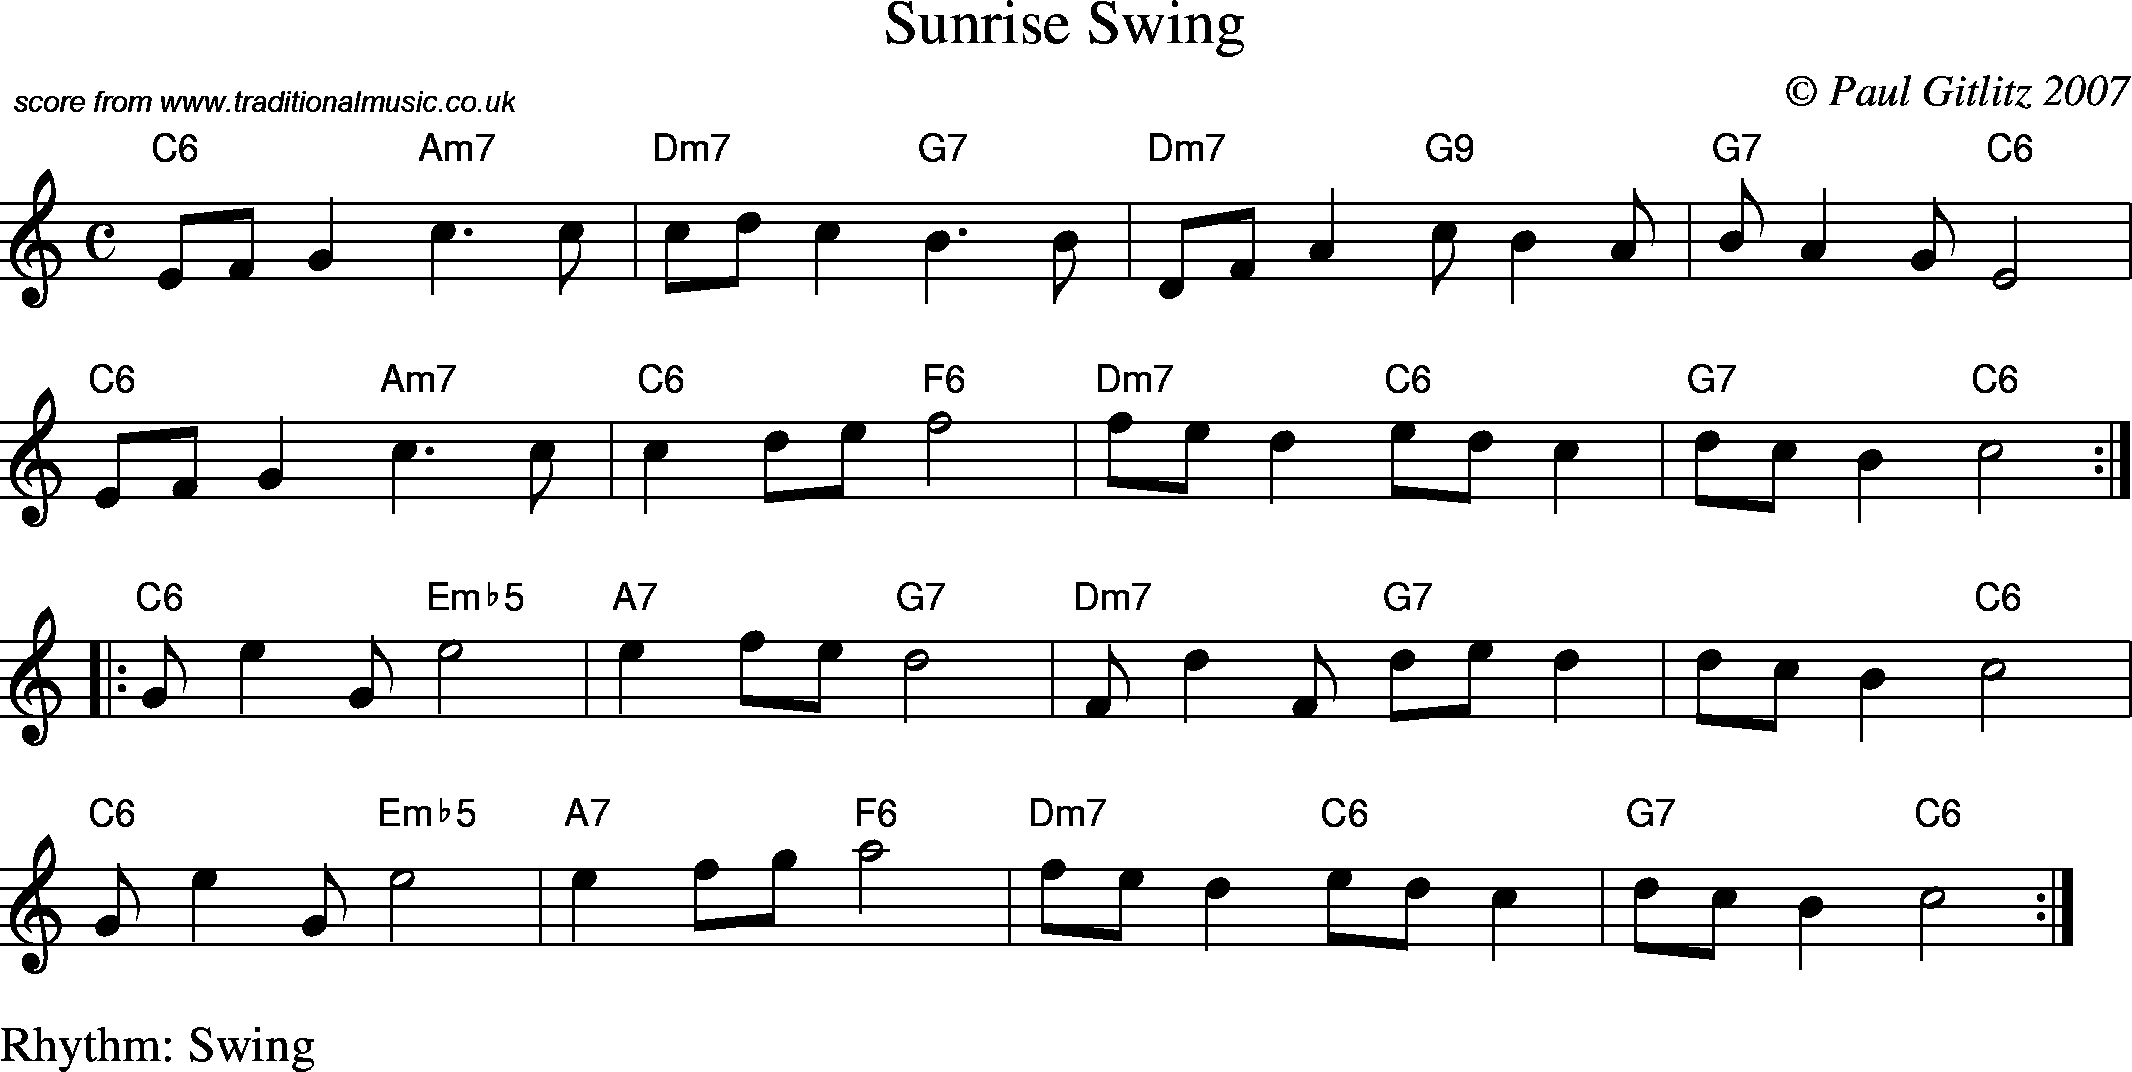 Sheet Music Score for Swing - Sunrise Swing